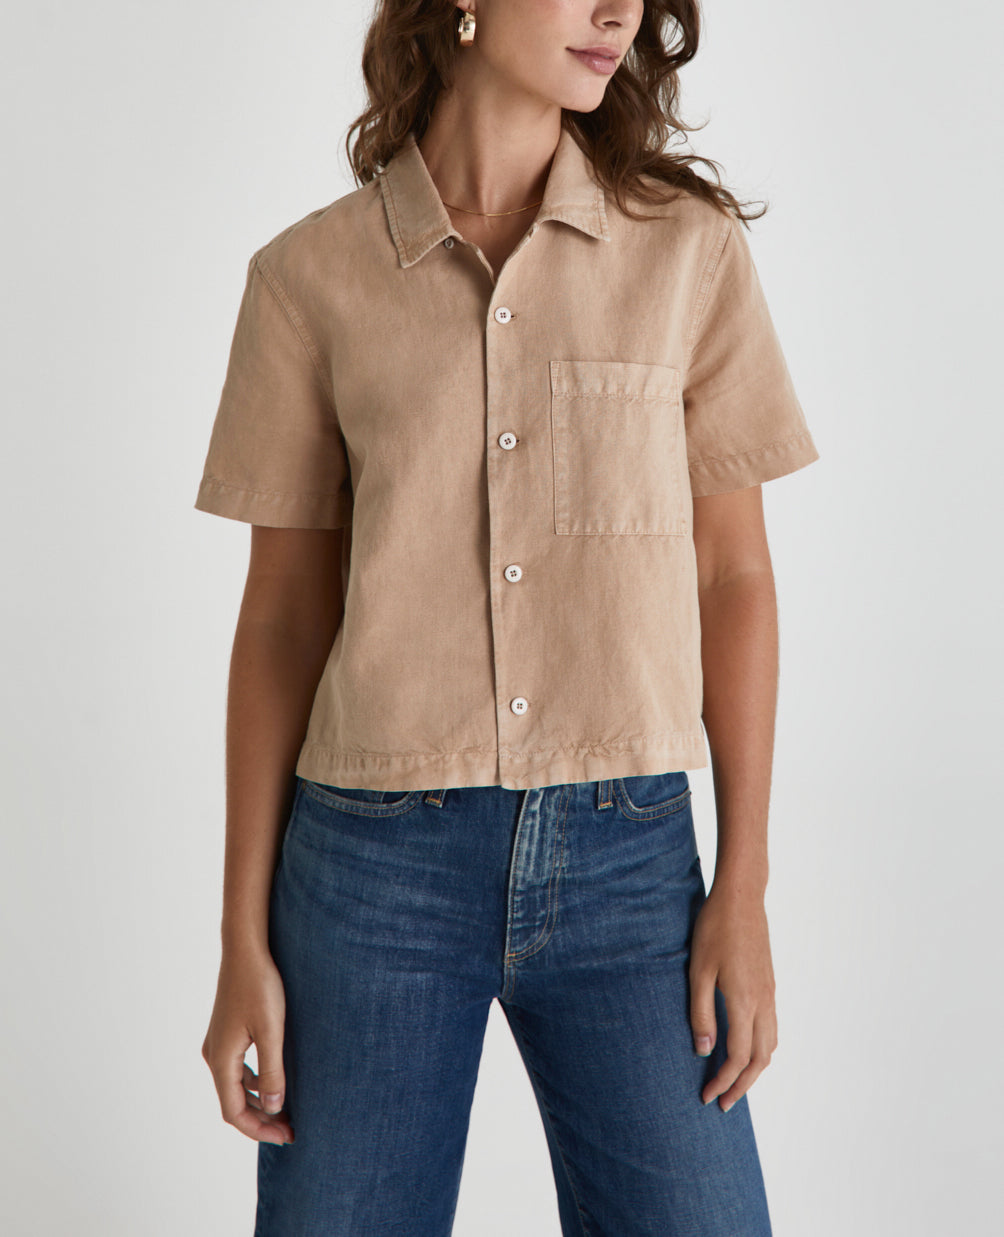 Brooklyn Cropped Shirt Sulfur X Mongoose Cropped Button Up Shirt Women Tops Photo 1